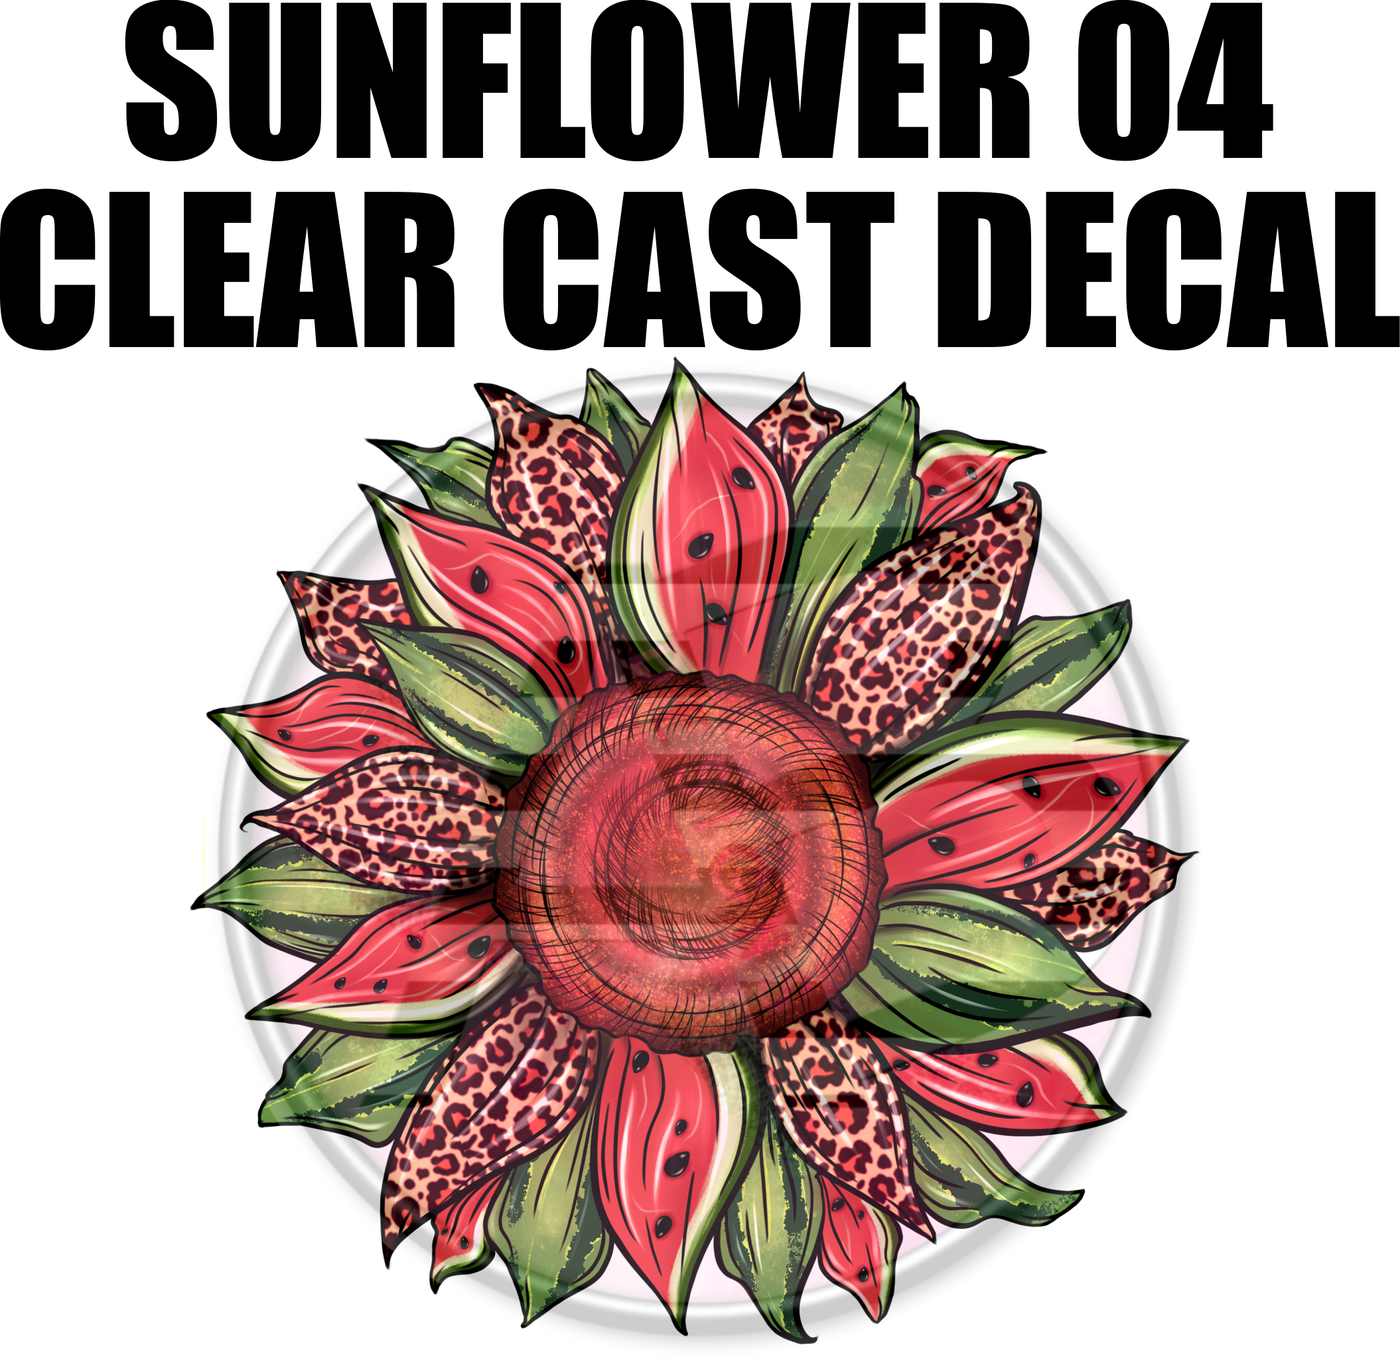 Sunflower 04 - Clear Cast Decal